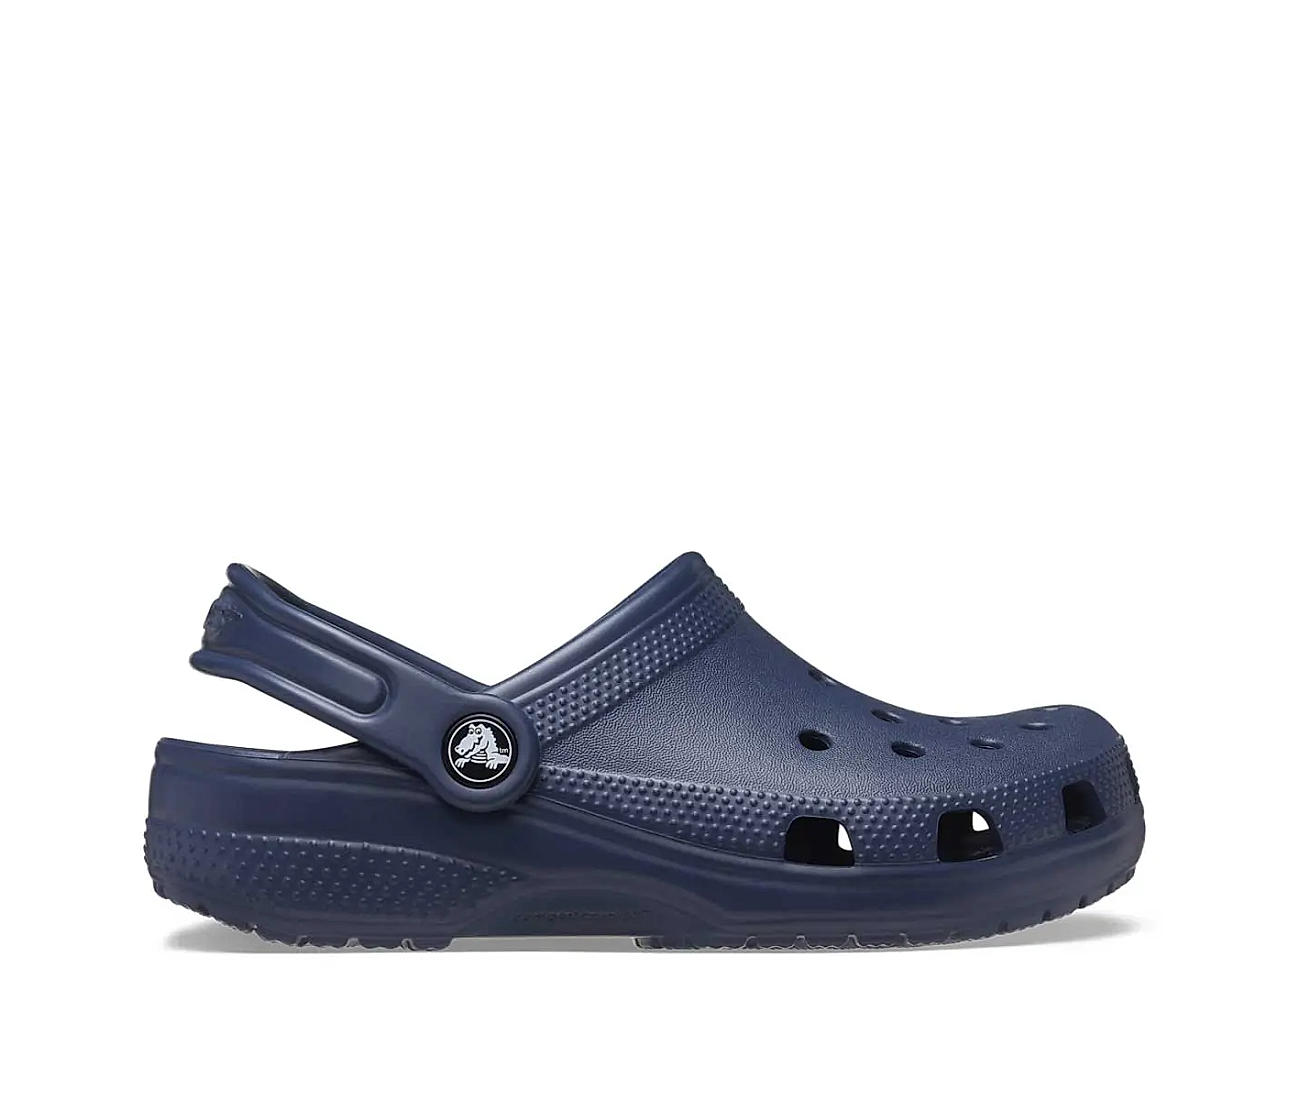 Crocs Classic Cozzzy Sandal - Slippers | Buy online | Bergfreunde.eu